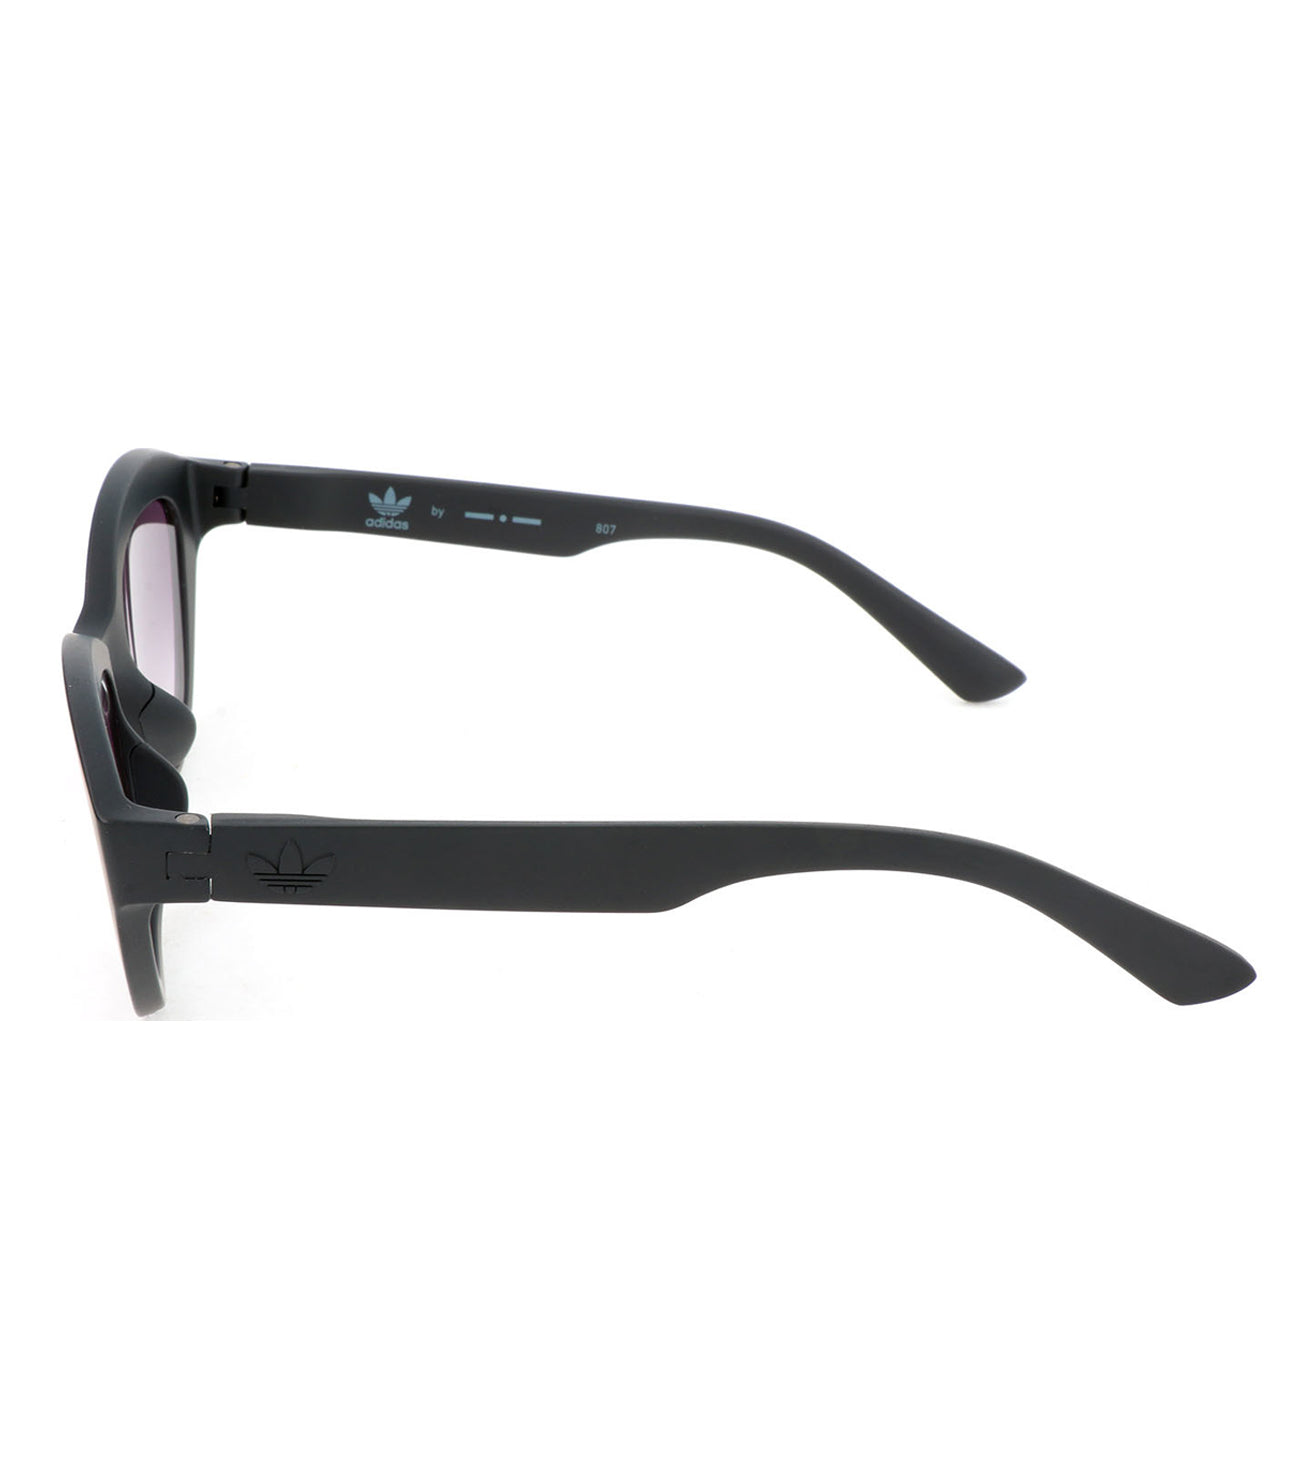 Adidas Originals Women's Grey Cat Eye Sunglasses